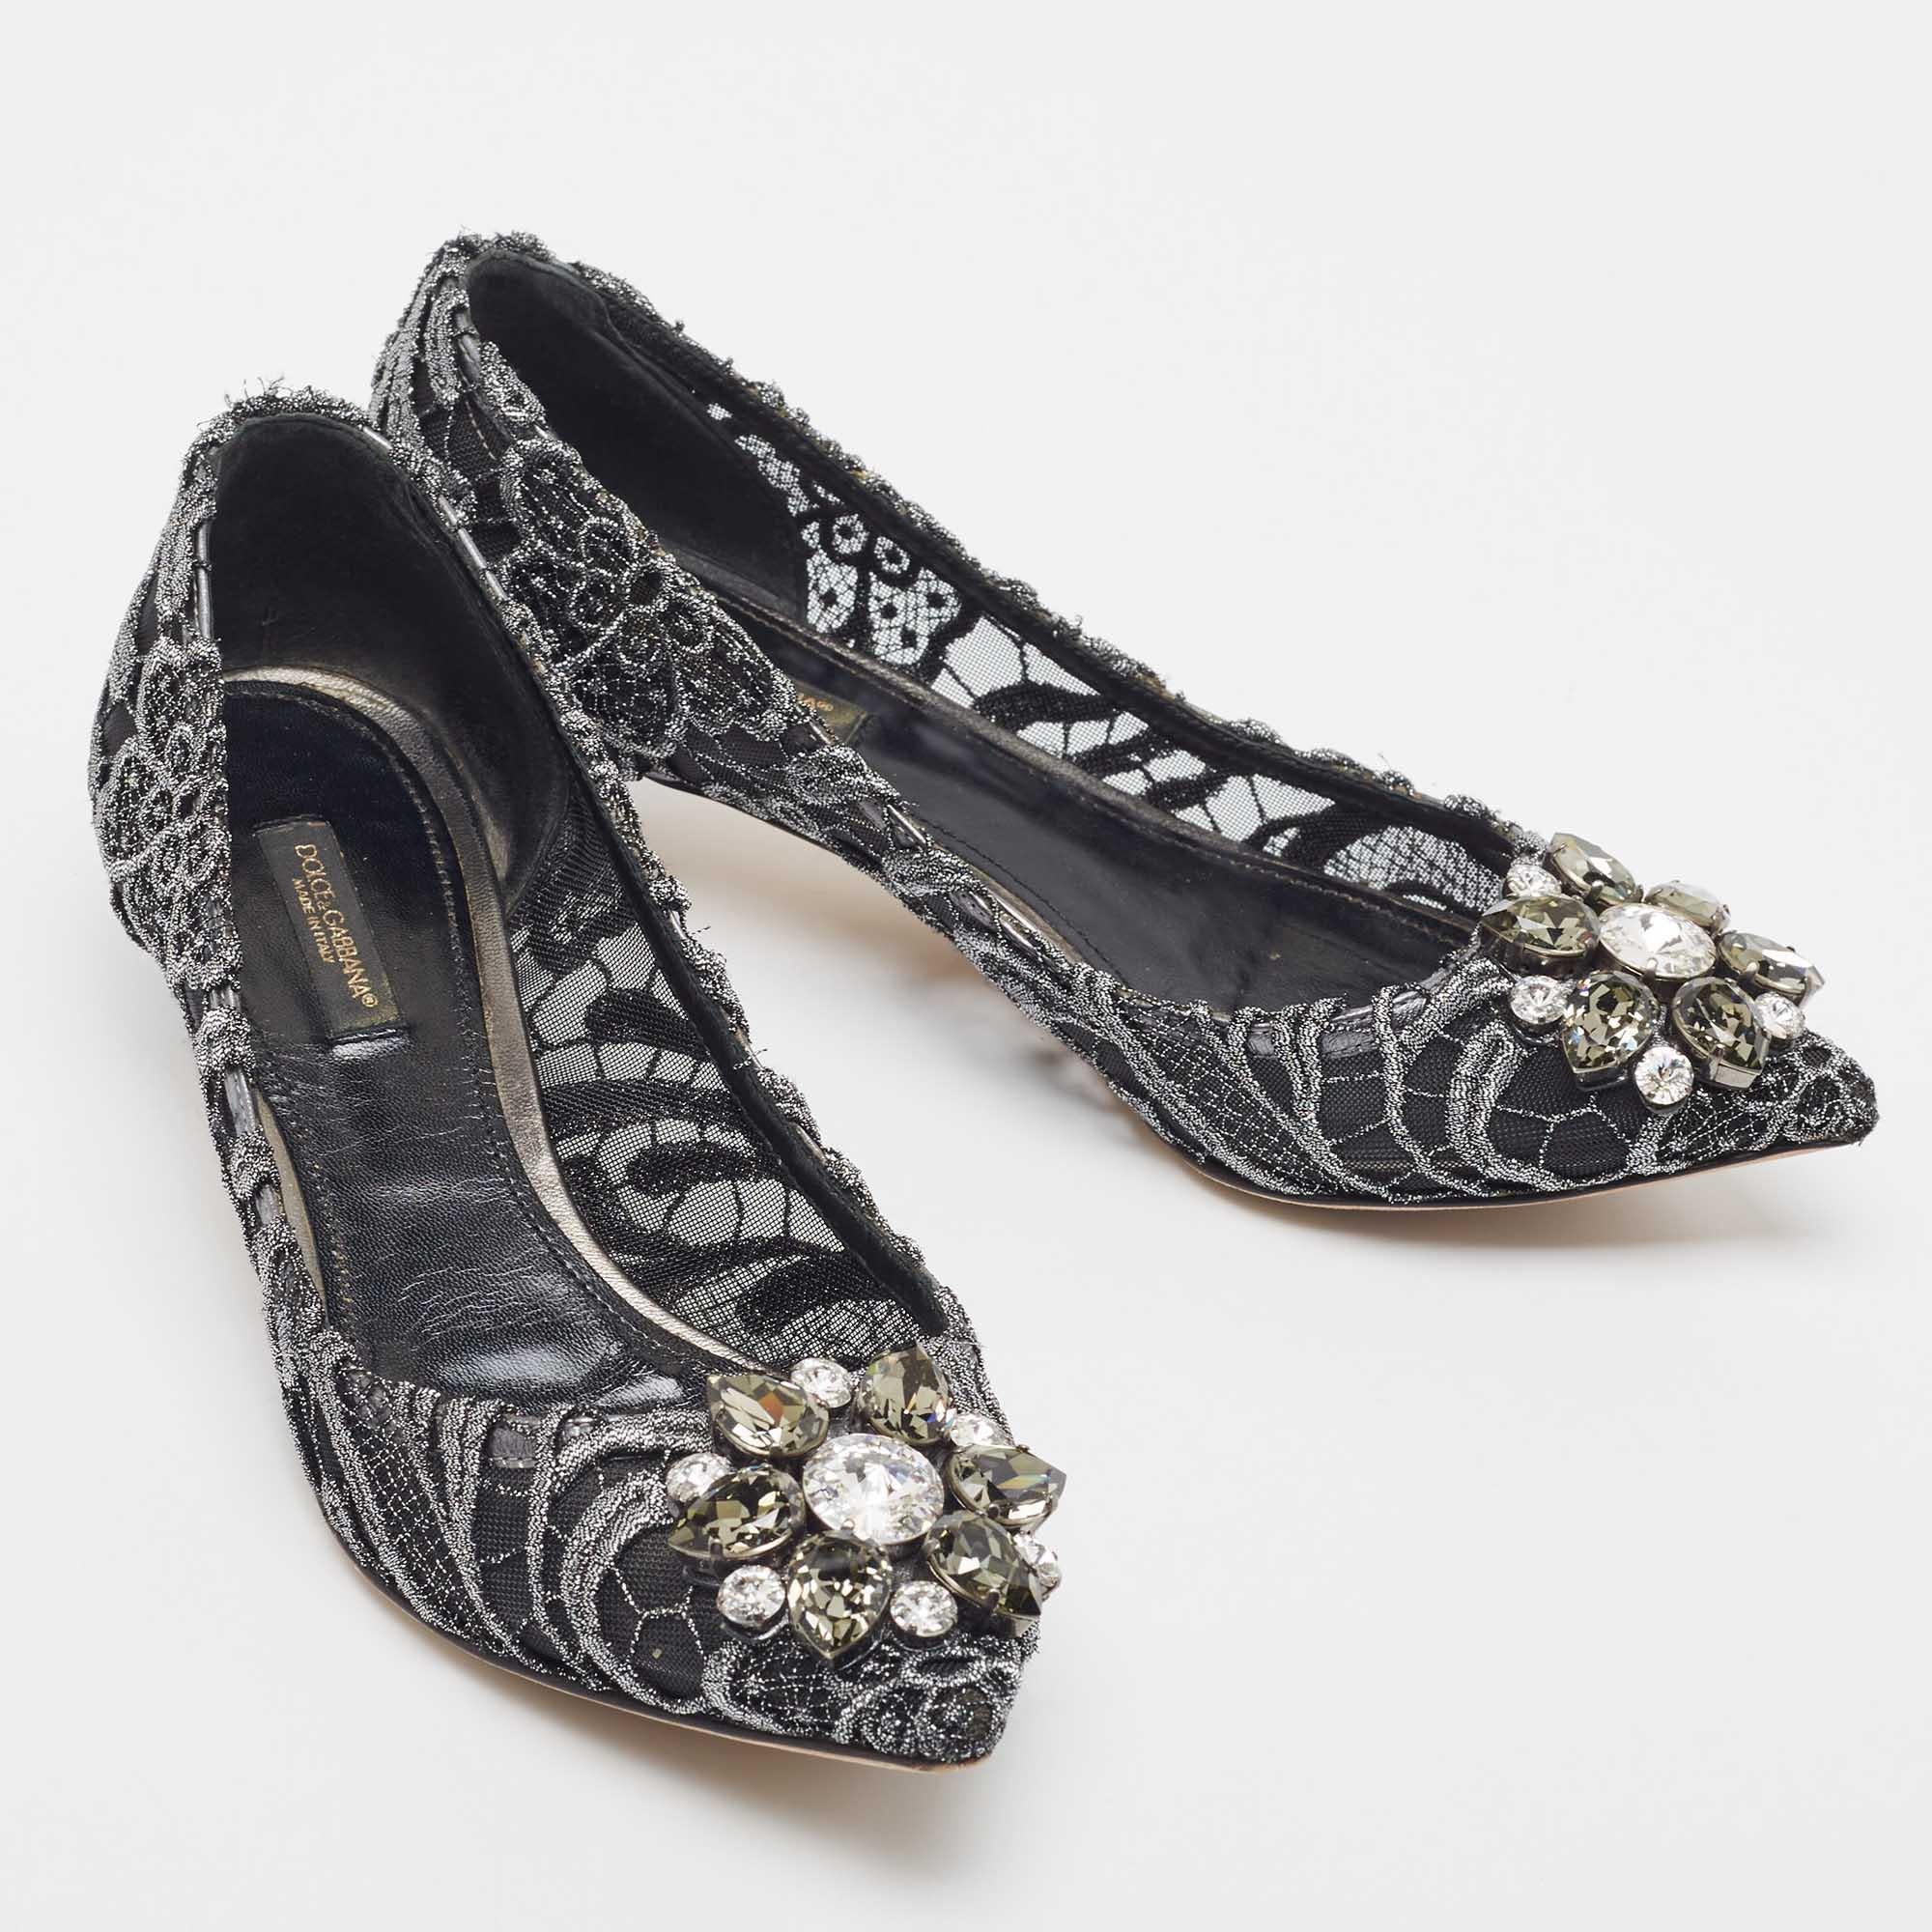 Dolce & Gabbana Silver/Black Lace Bellucci Crystal Embellished Kitten Heel Pumps In Good Condition For Sale In Dubai, Al Qouz 2